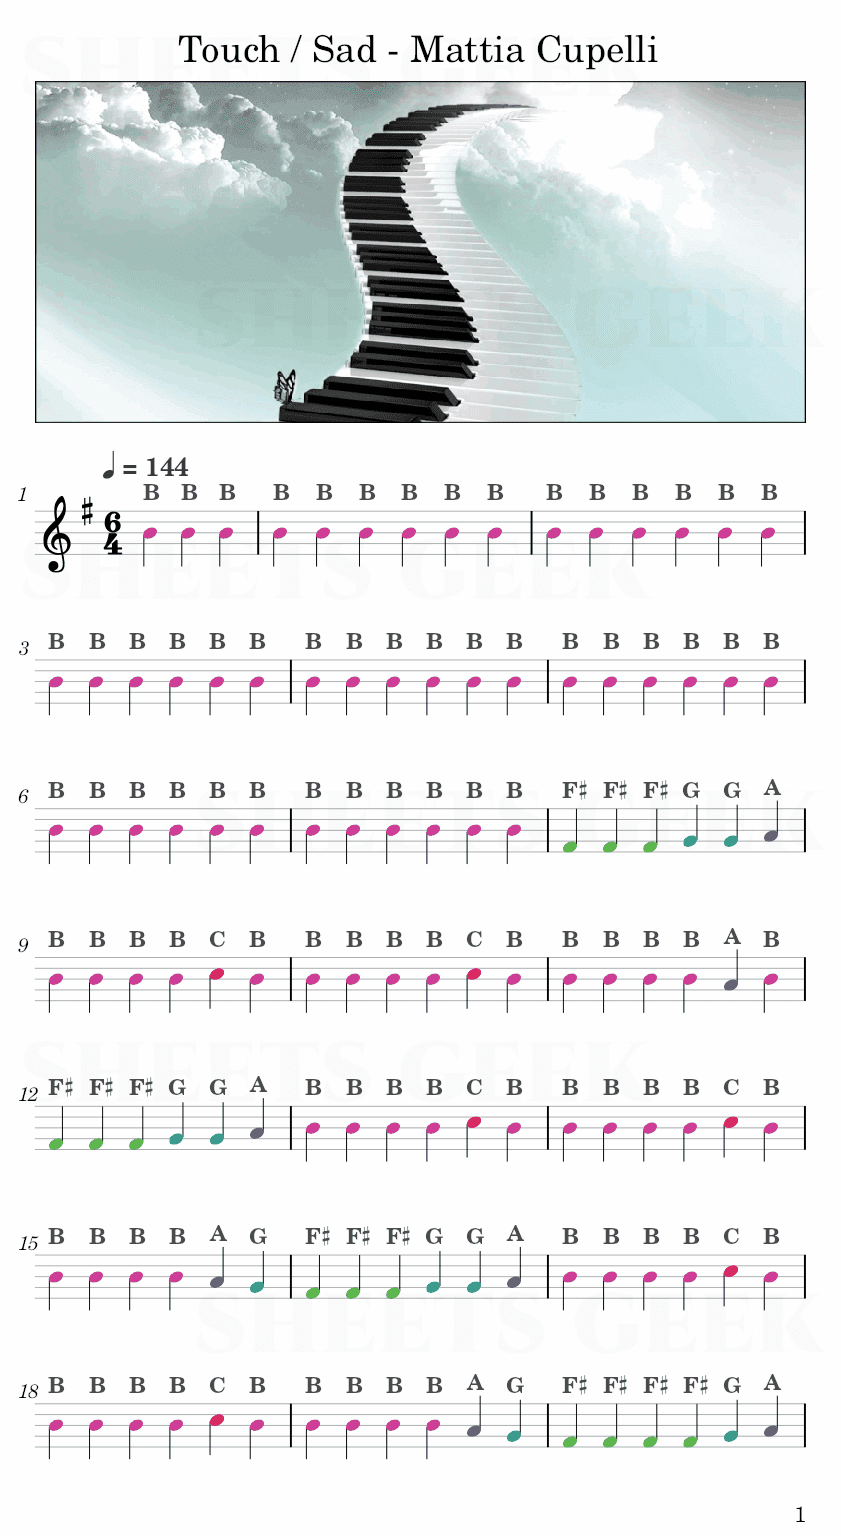 Touch / Sad - Mattia Cupelli Easy Sheet Music Free for piano, keyboard, flute, violin, sax, cello page 1